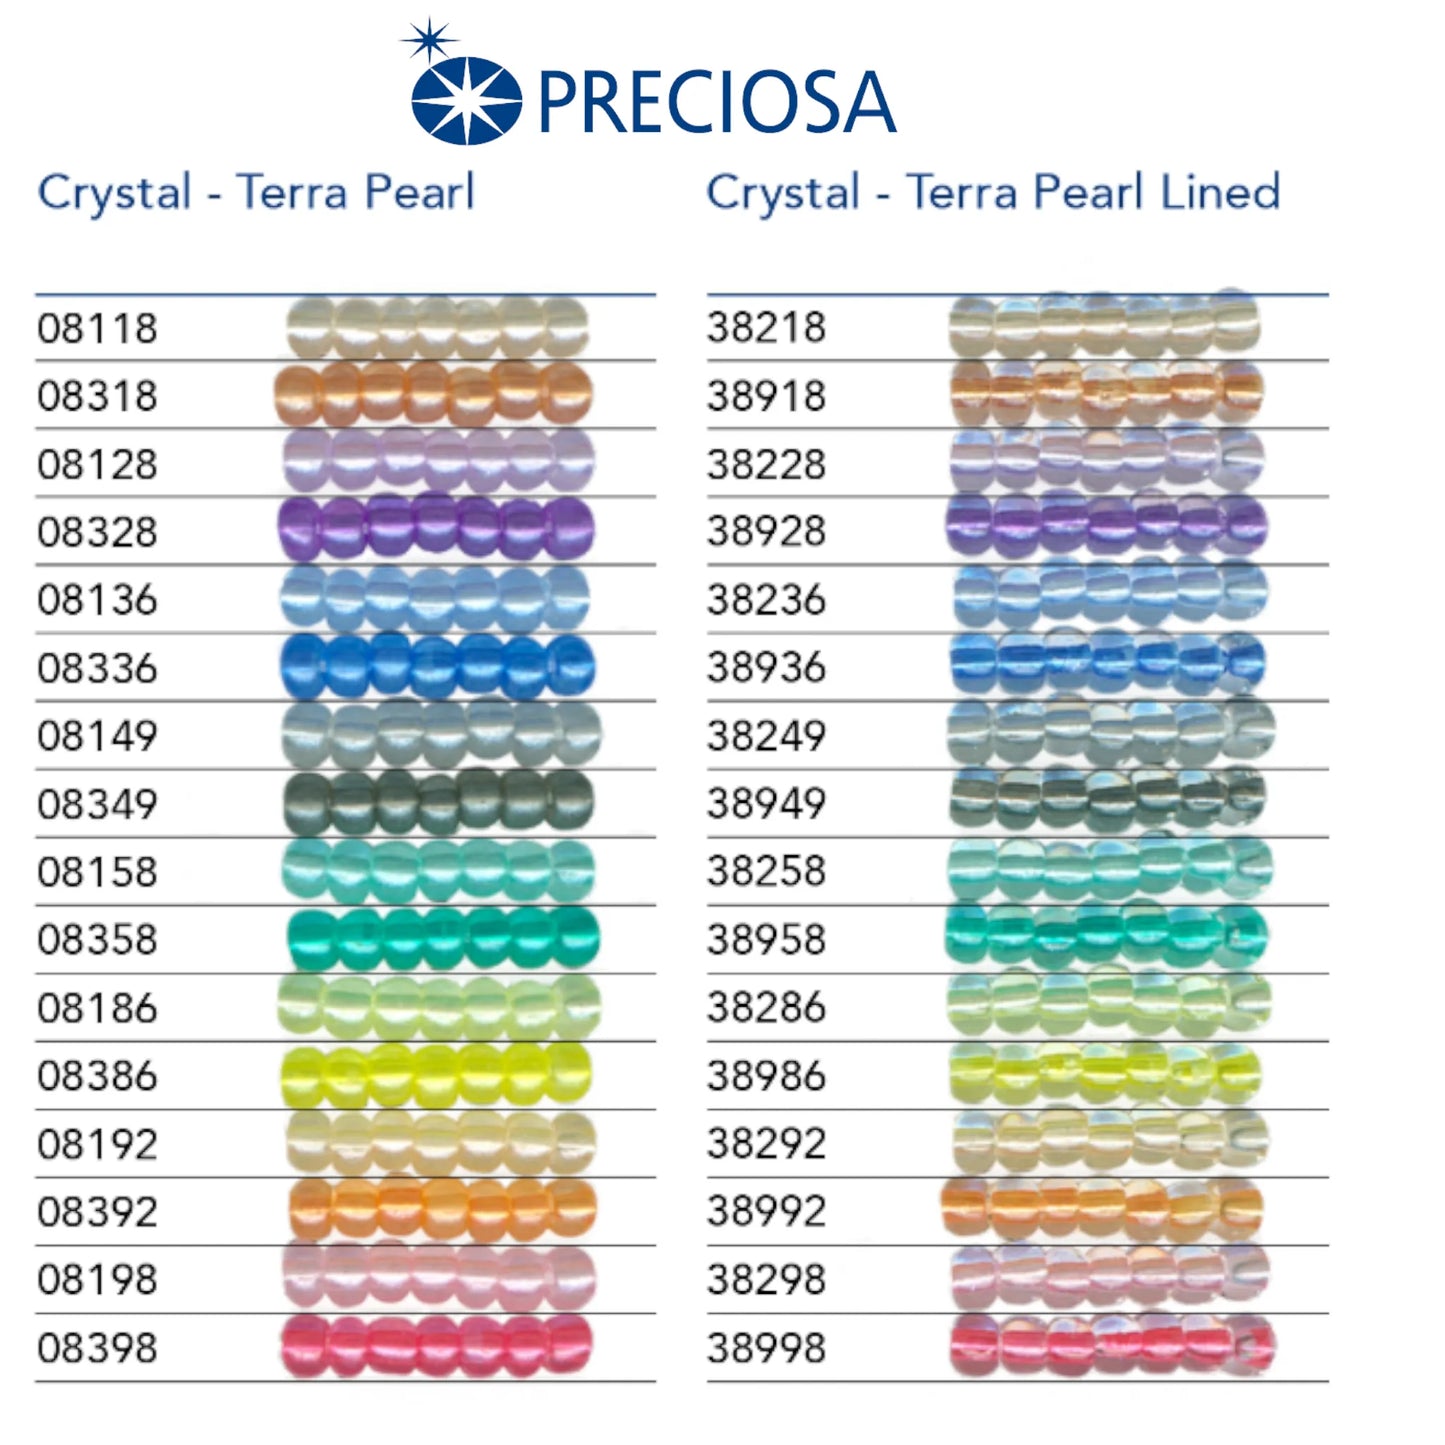 38298 Rocailles tchèques PRECIOSA Rocailles 10/0 rose. Cristal – Terra Pearl doublé.